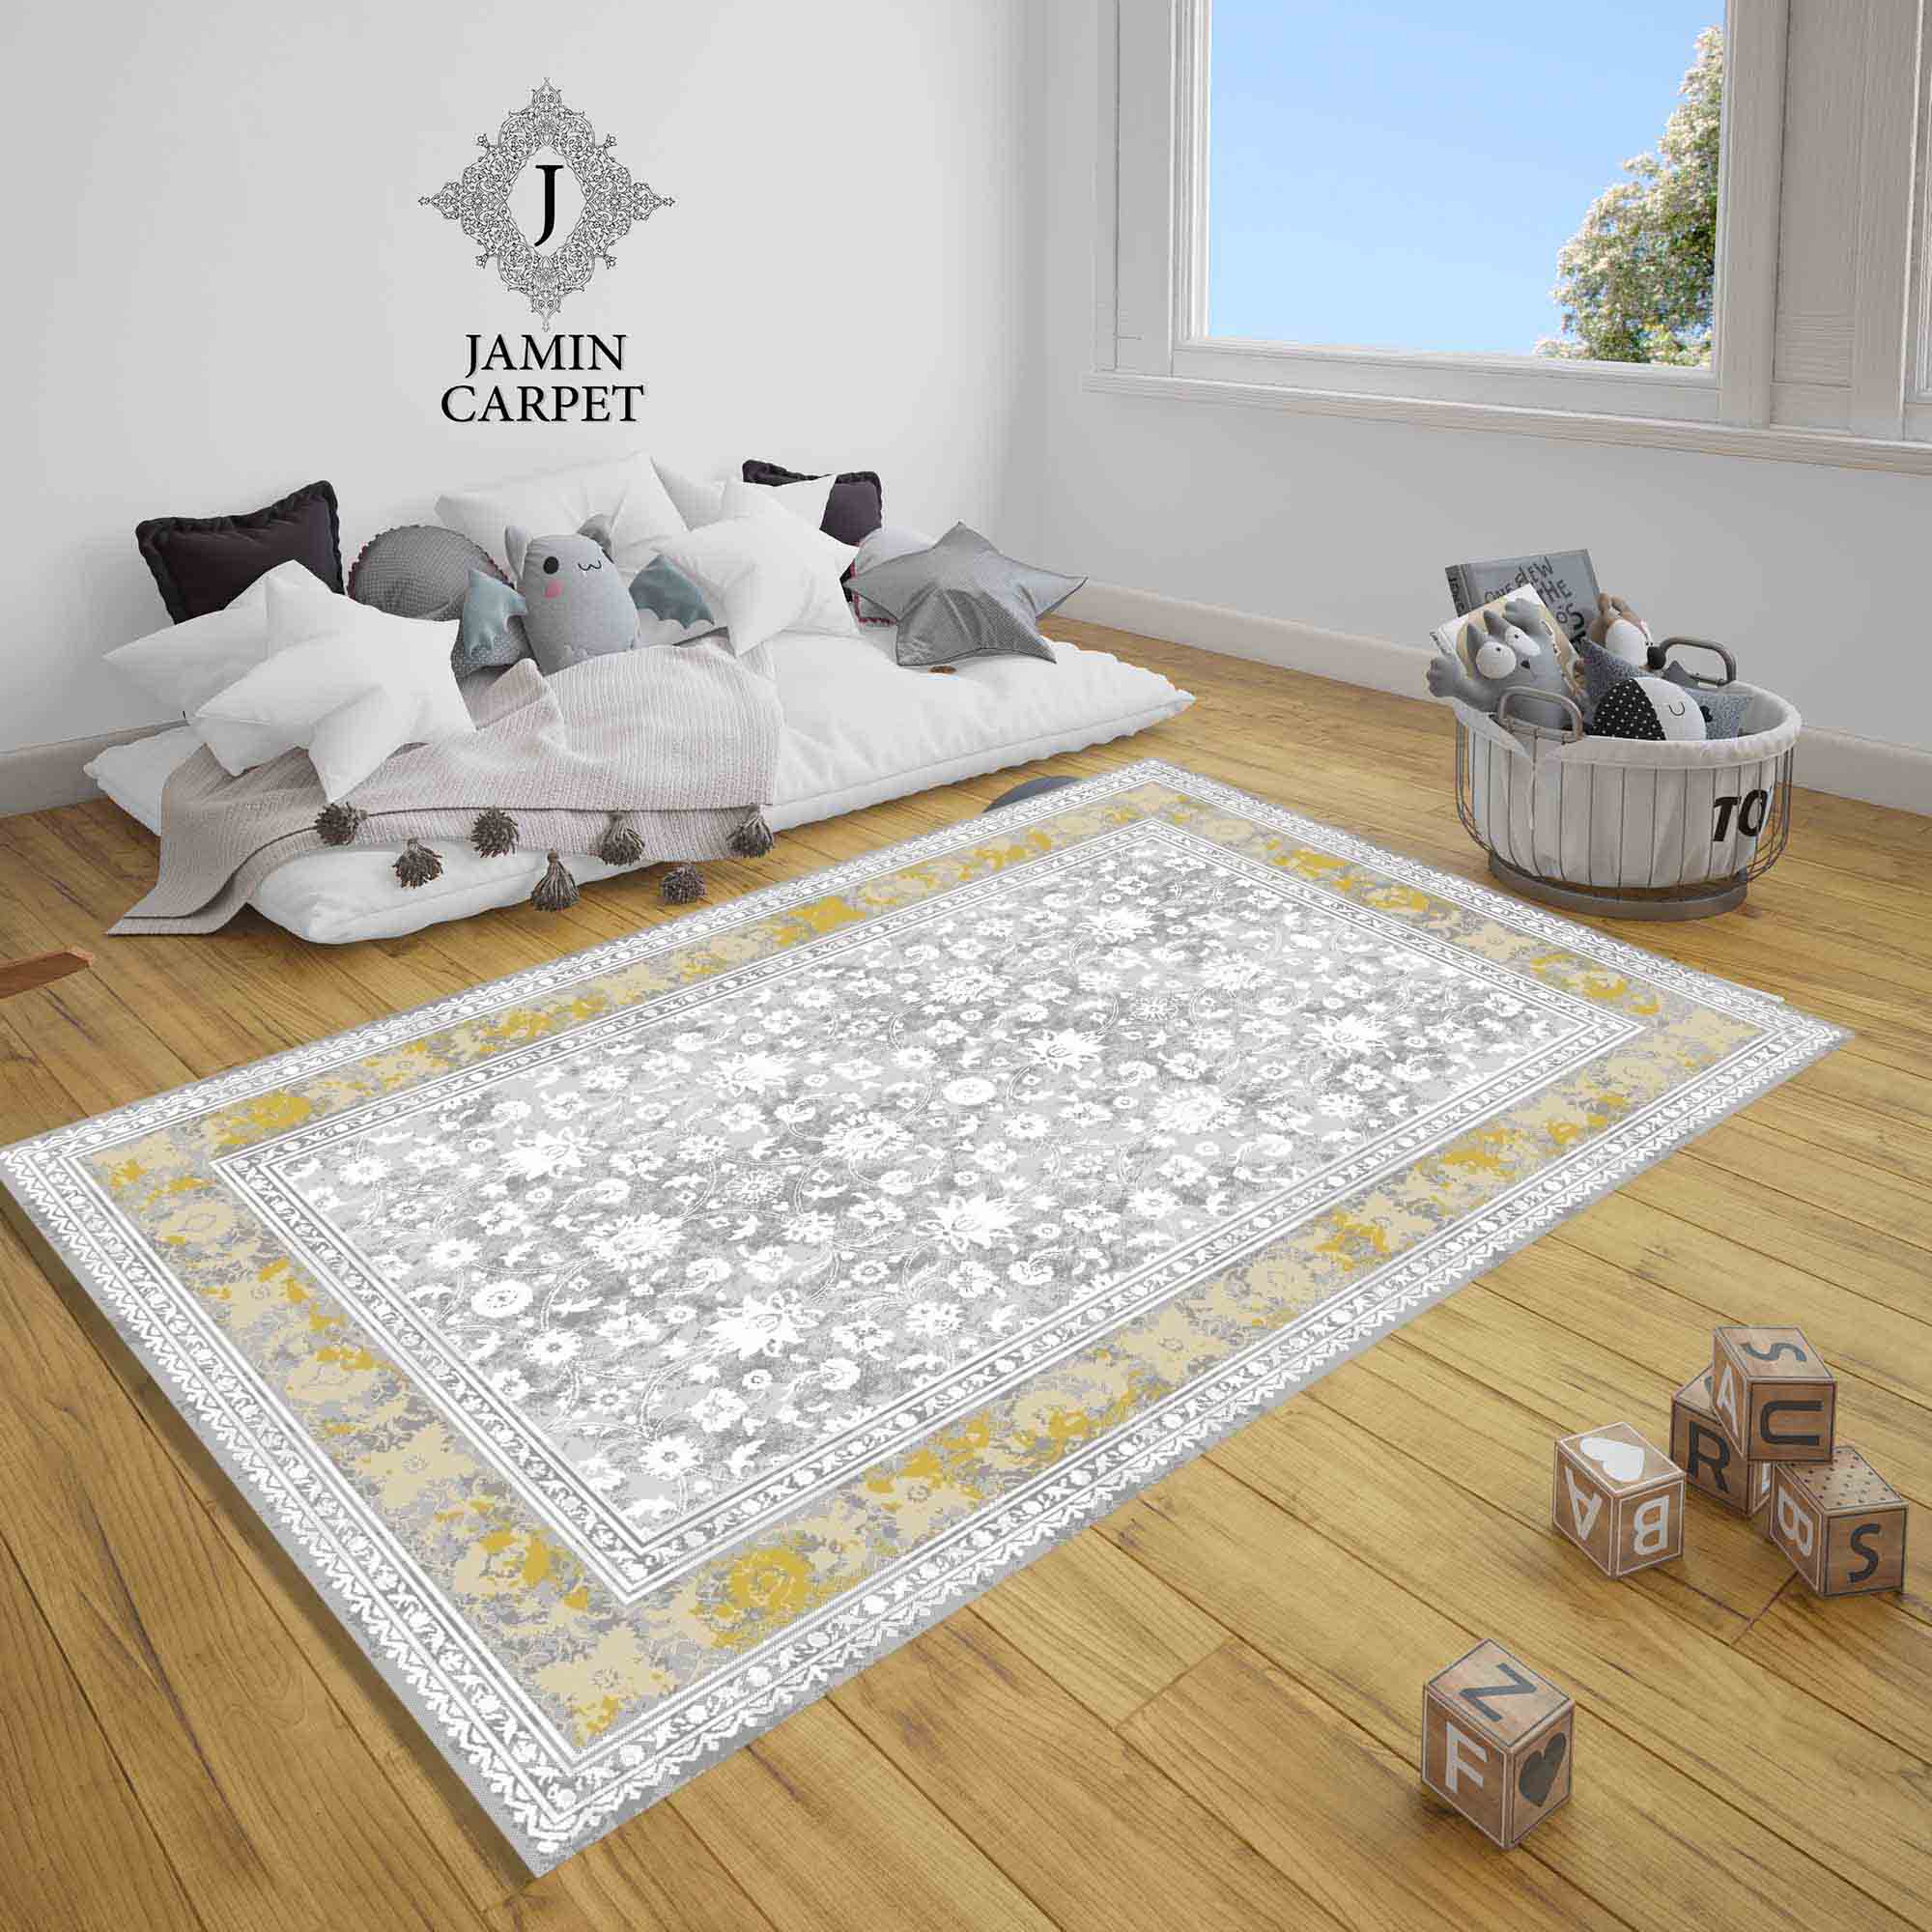 Fantasy carpet code 212 comb 400 density 1800 all acrylic